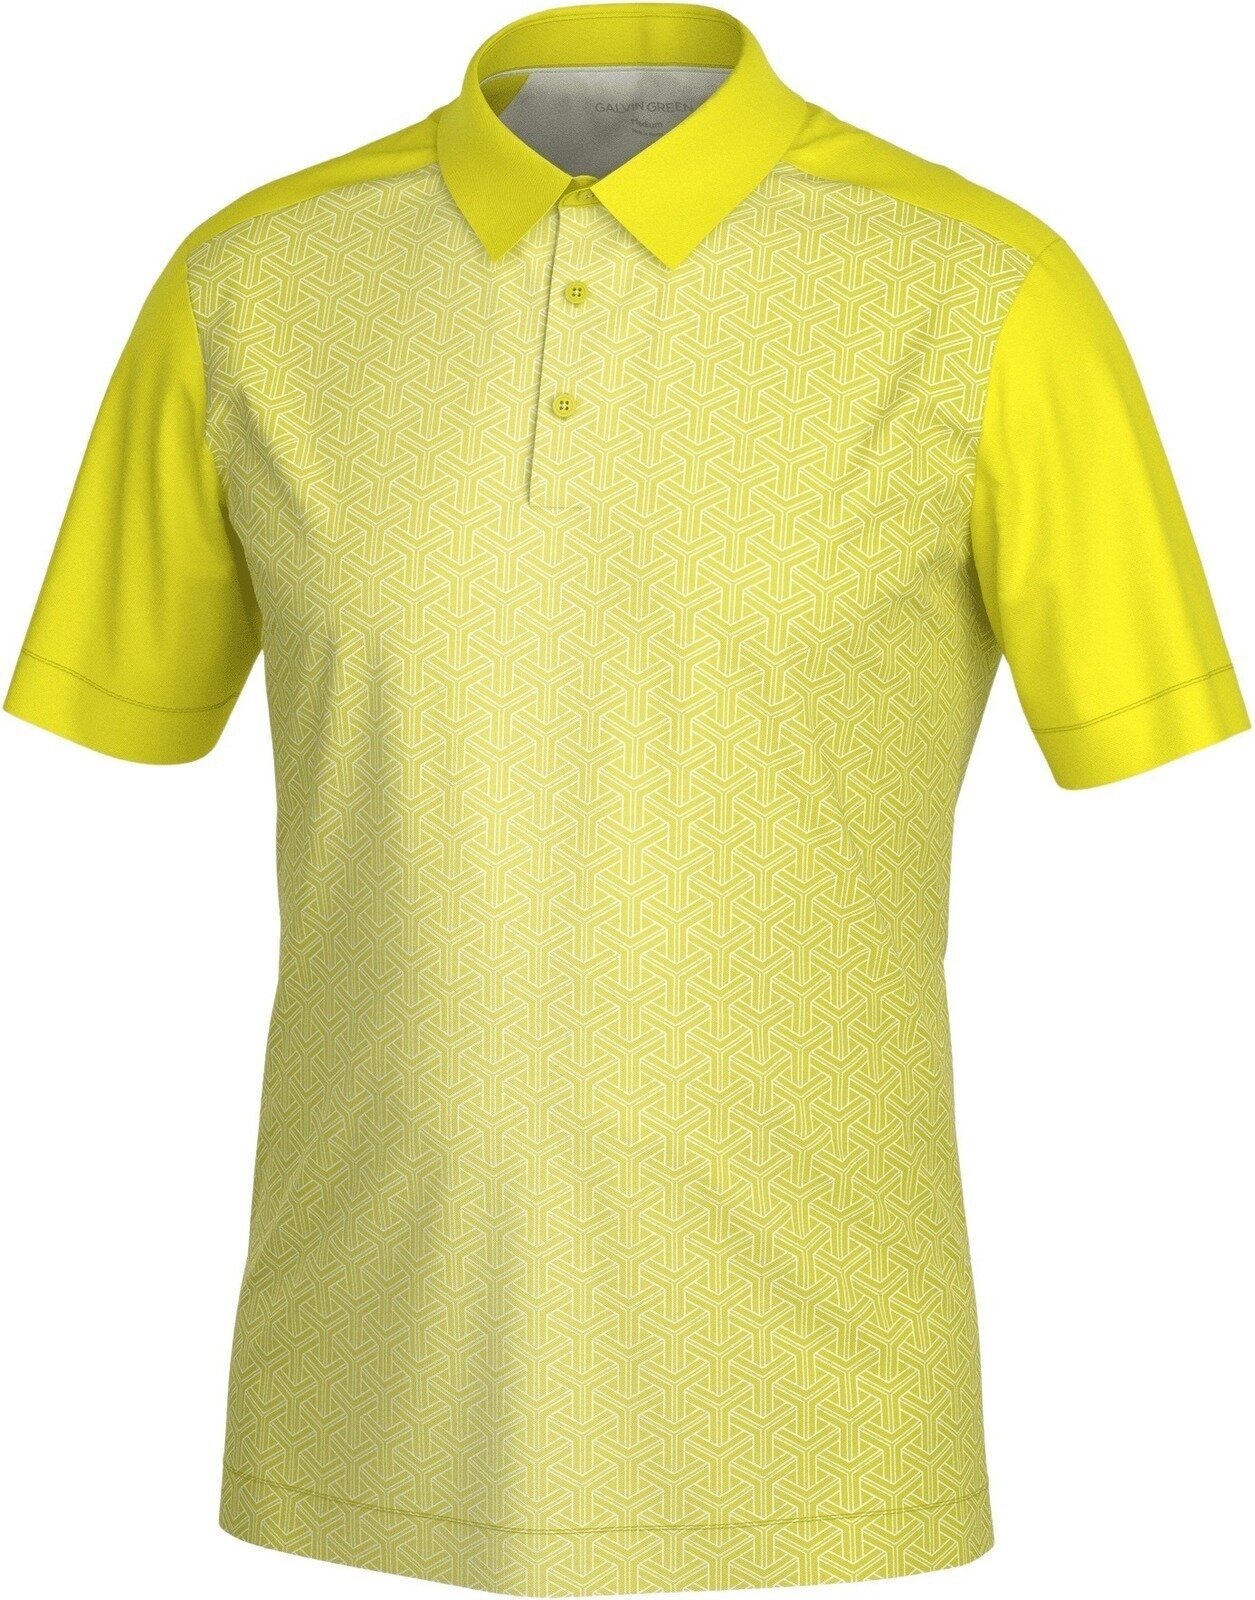 Galvin Green Mile Mens Polo Shirt Lime/White L